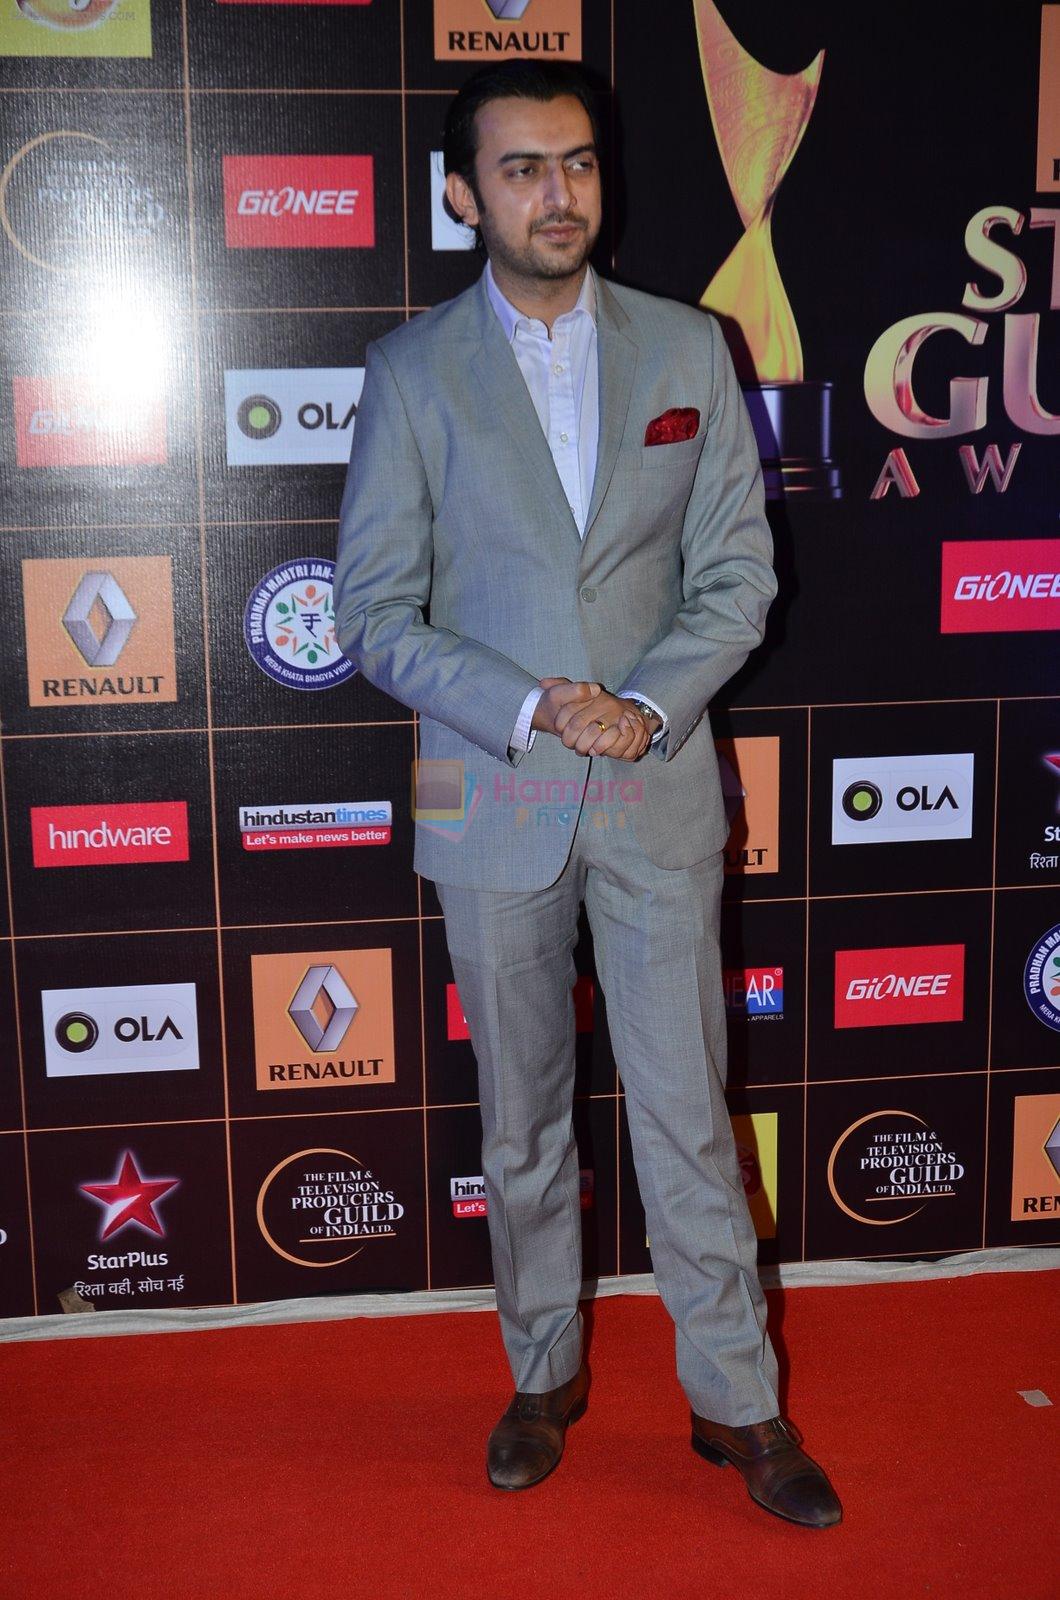 Sahil Sangha at Producers Guild Awards 2015 in Mumbai on 11th Jan 2015